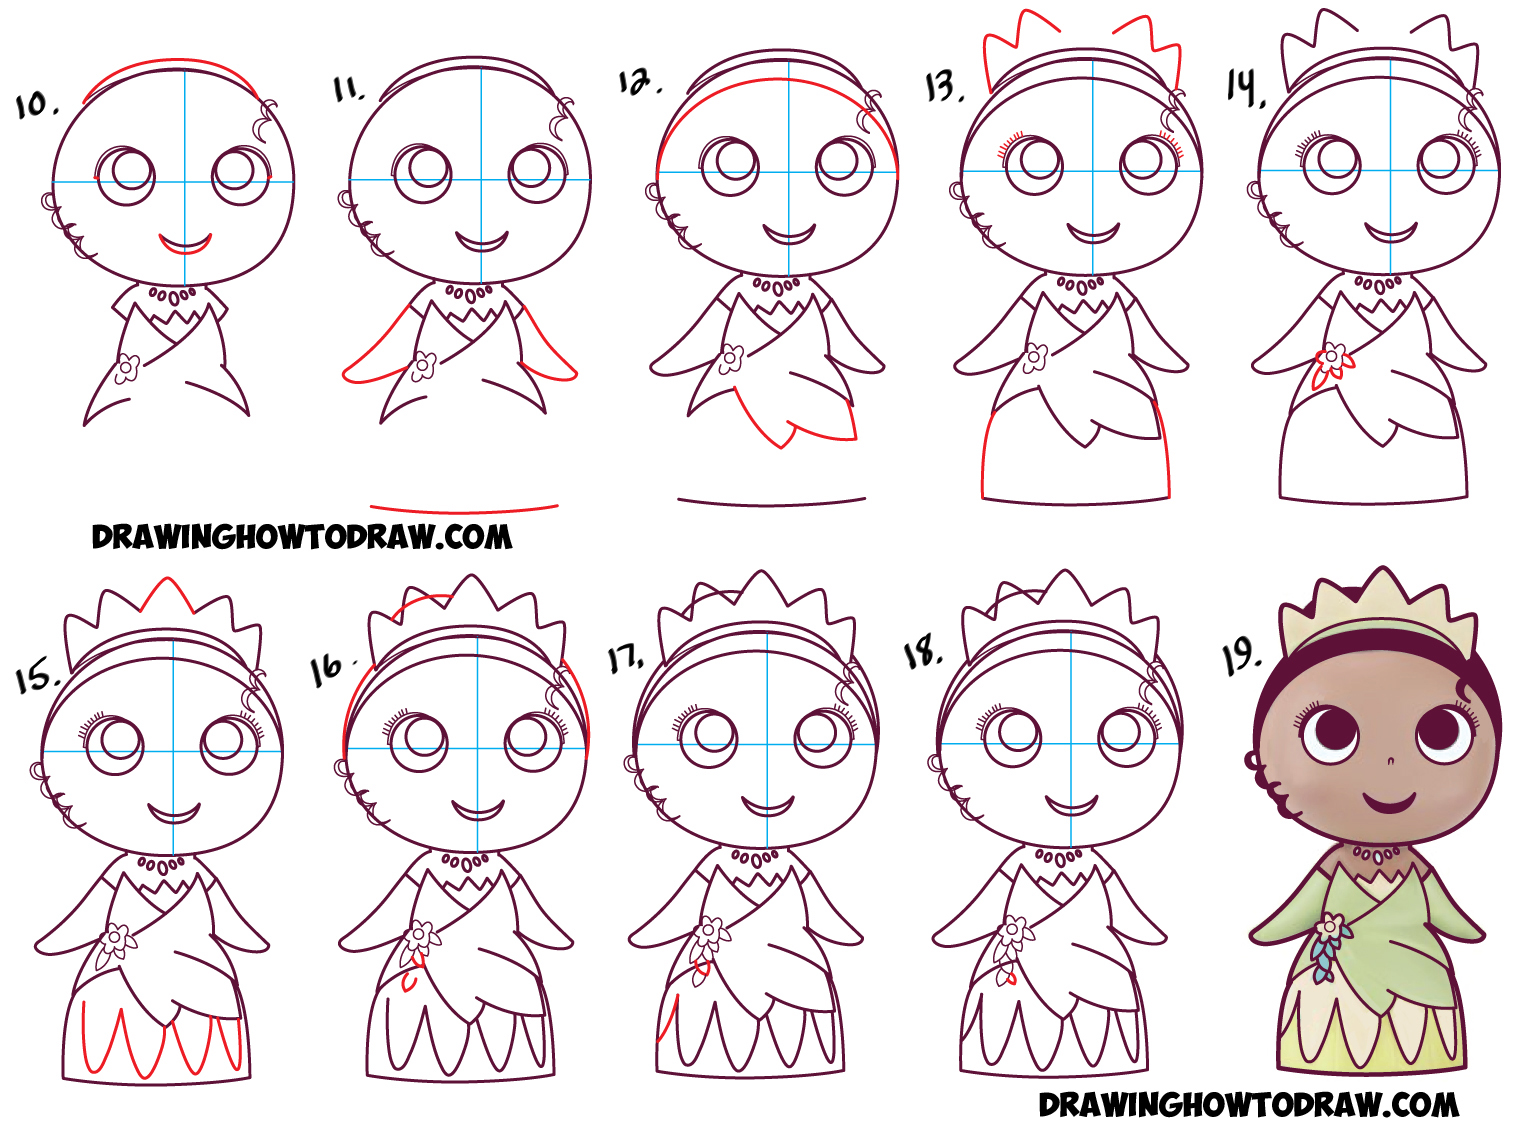 How to Draw Cute Baby Chibi Kawaii Tiana the Disney Princess How to